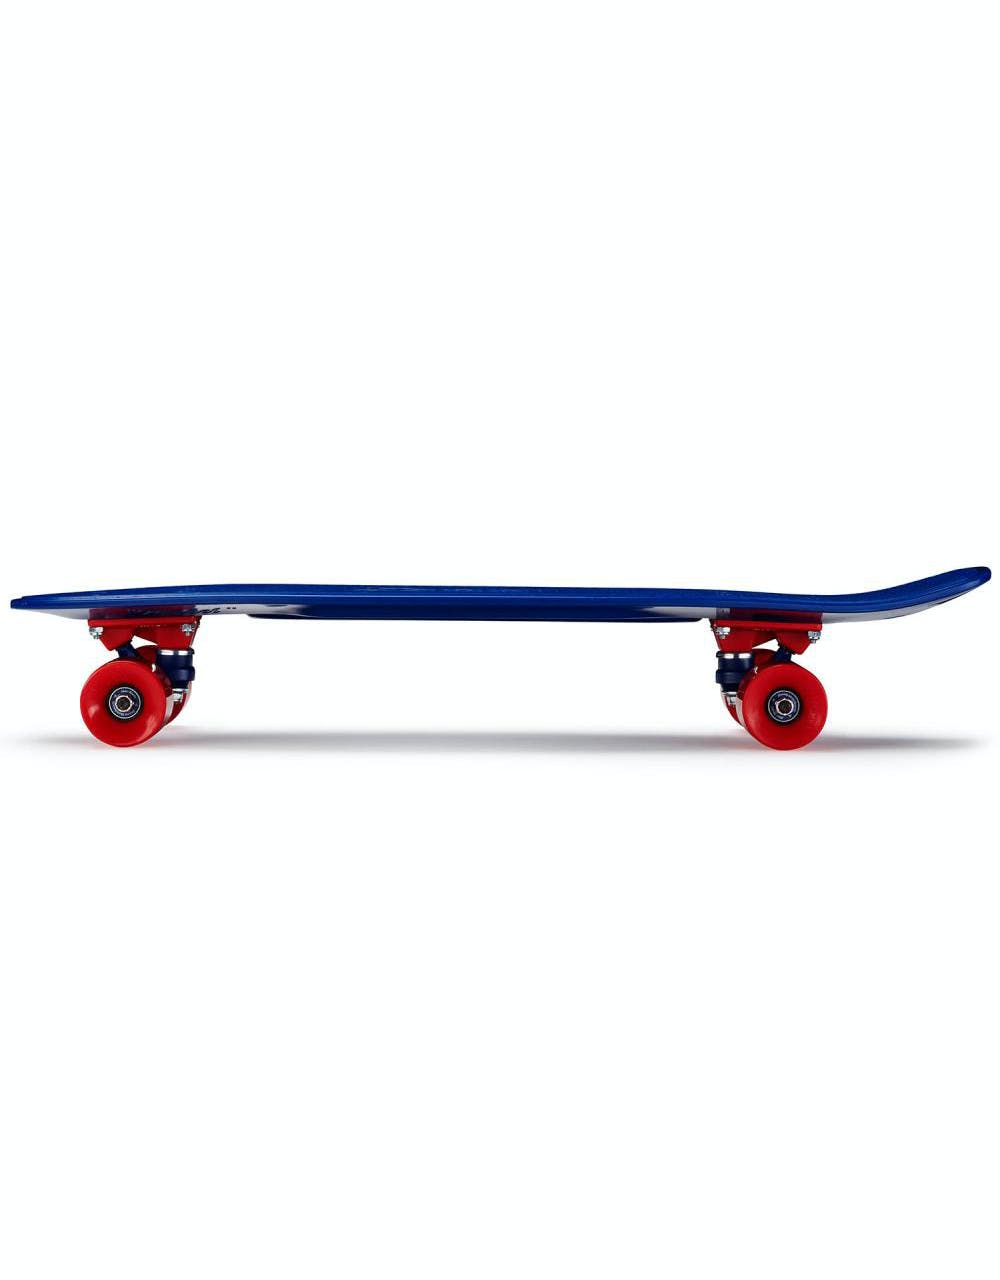 Penny Skateboards Classic Nickel Cruiser - 27" - Cobalt